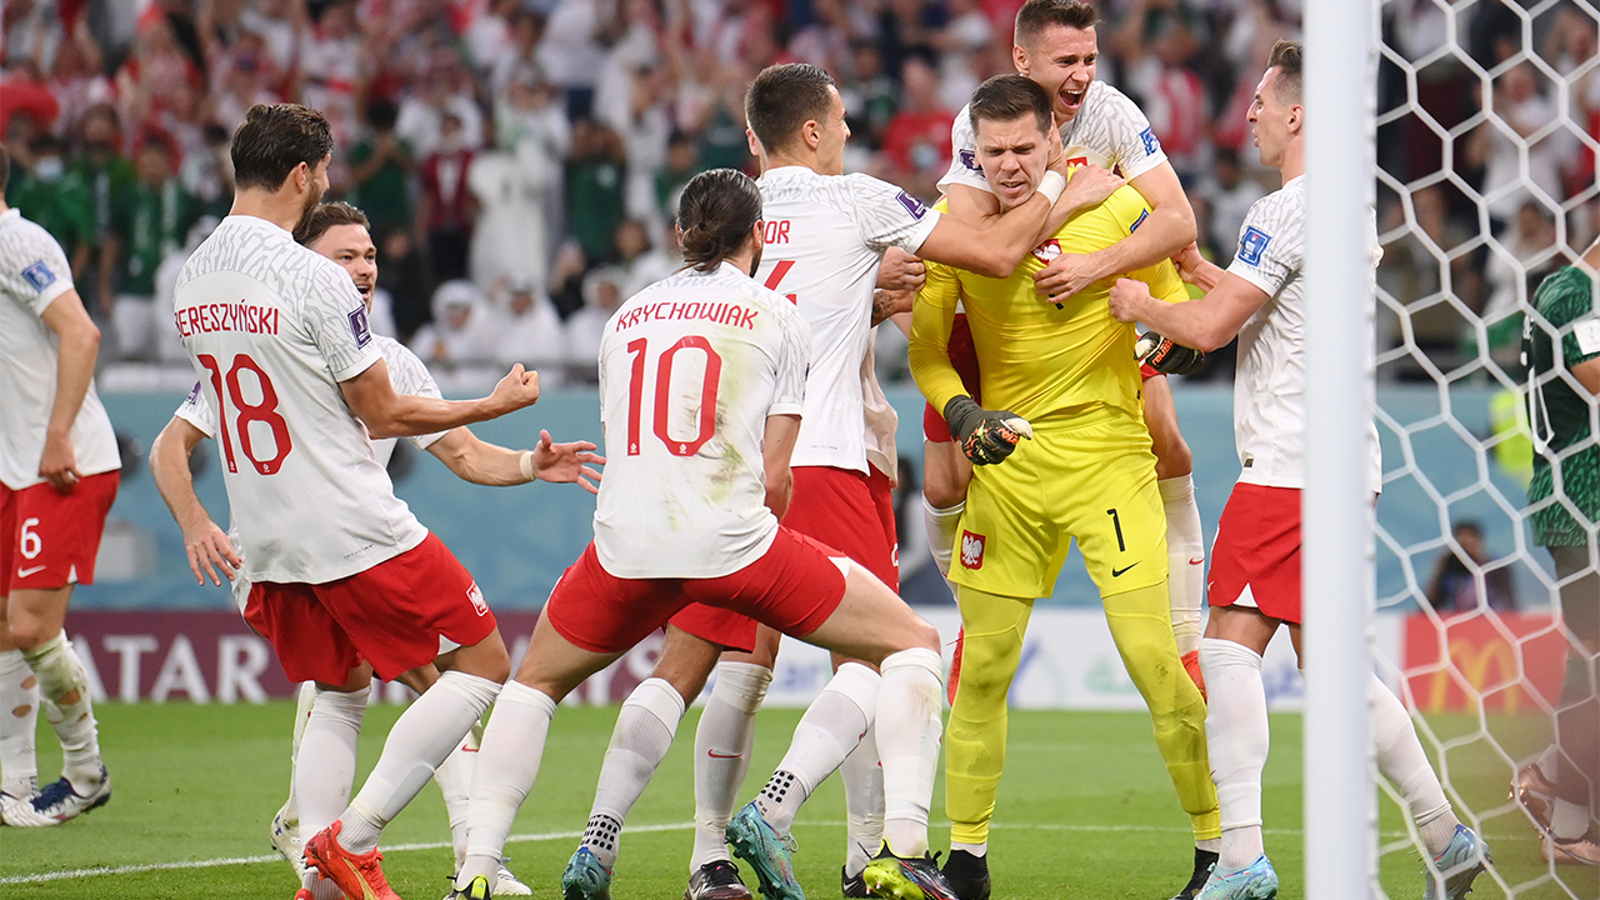 Wojciech Szczesny makes an incredible save on a PK to keep Poland ahead of Saudi Arabia 